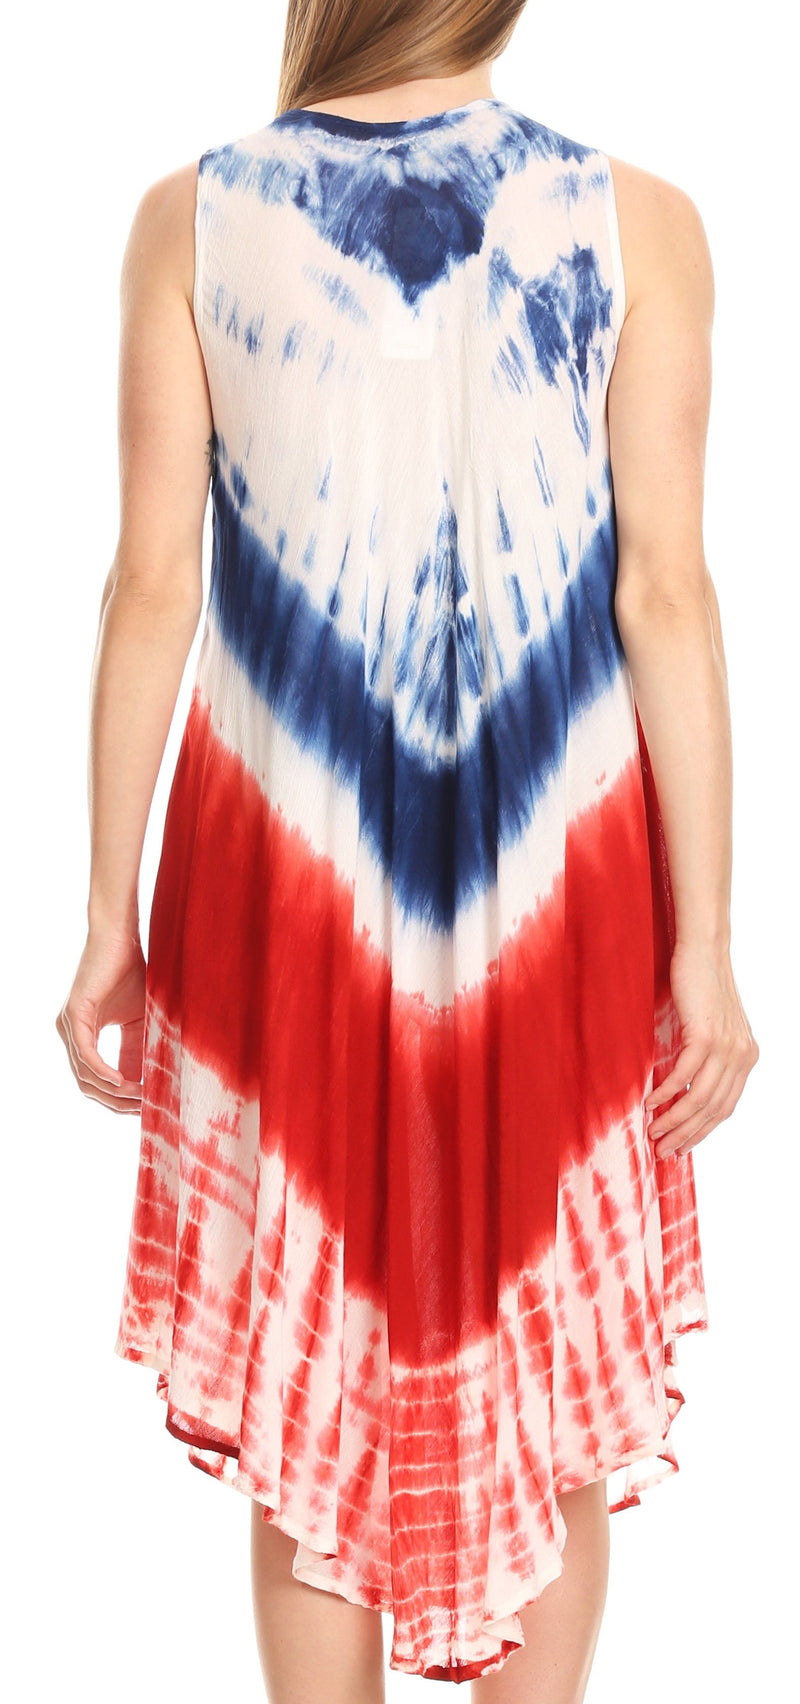 Sakkas Irina Stars and Stripes Patriotic Tie-Dye Summer Tank Dress  Casual Simple